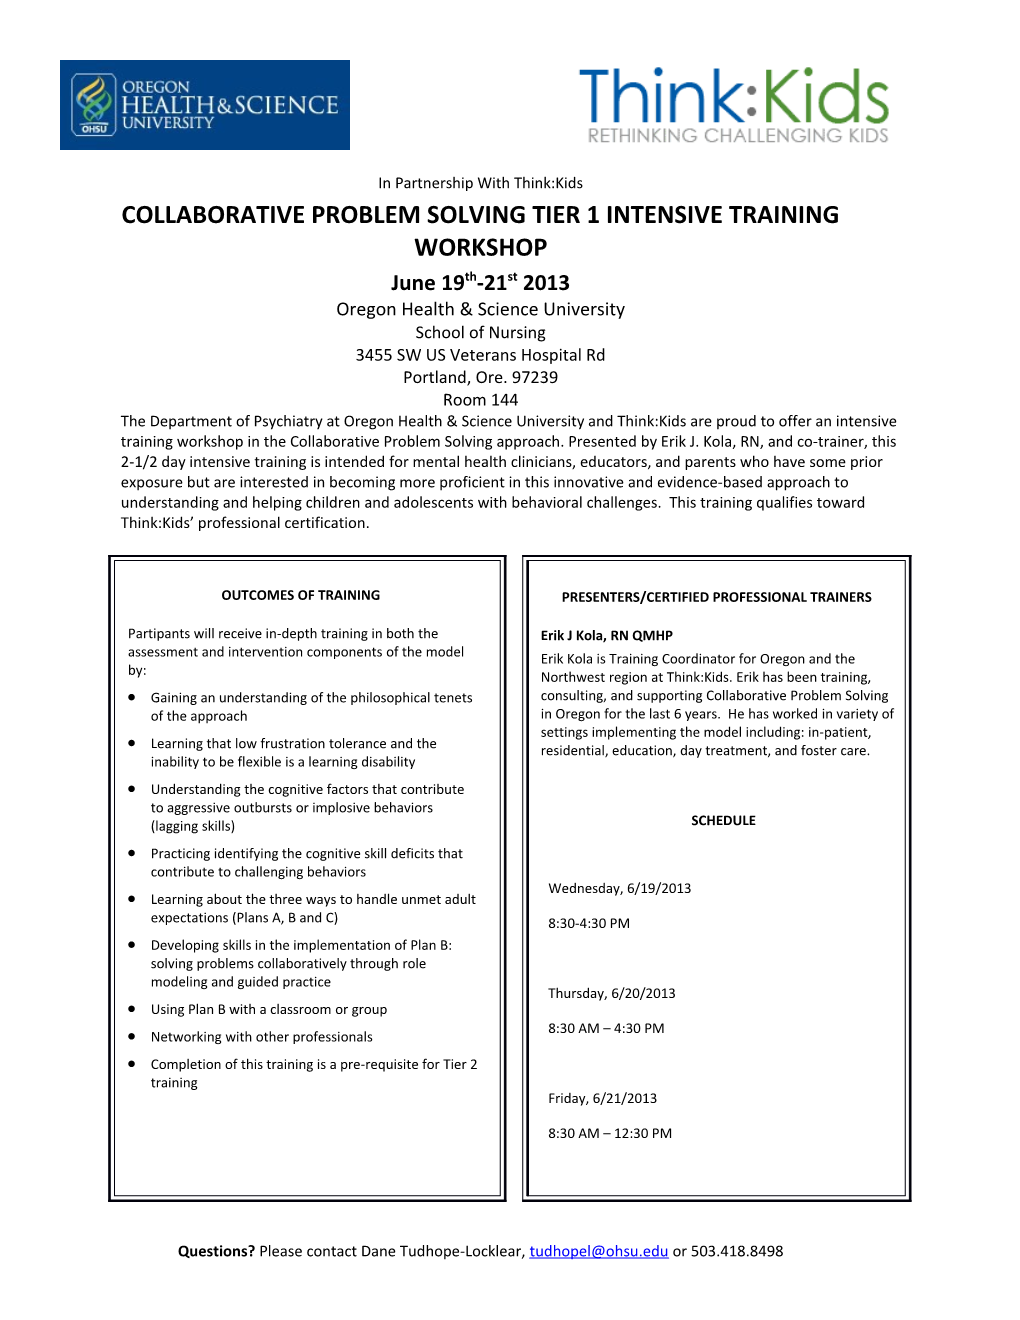 Collaborative Problem Solving Tier 1 Intensive Training Workshop